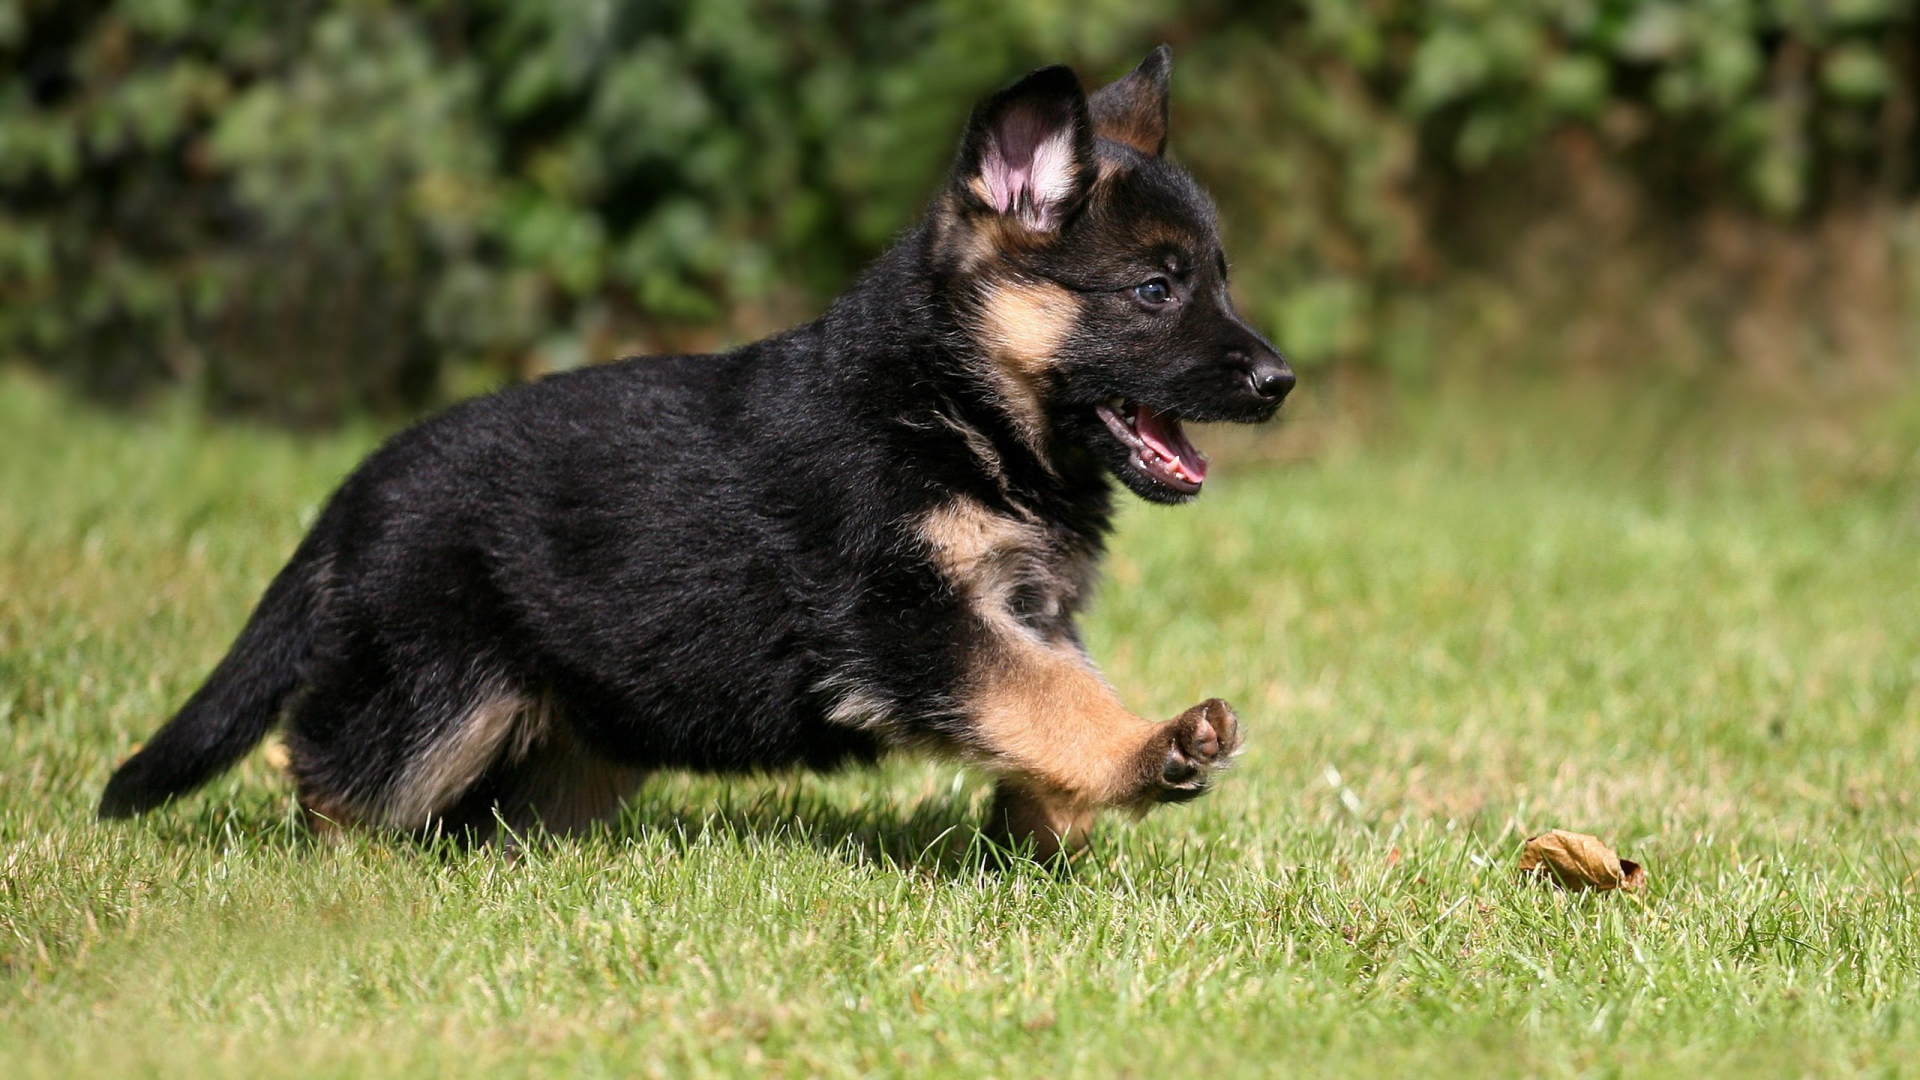 German Shepherd puppy runs on grass